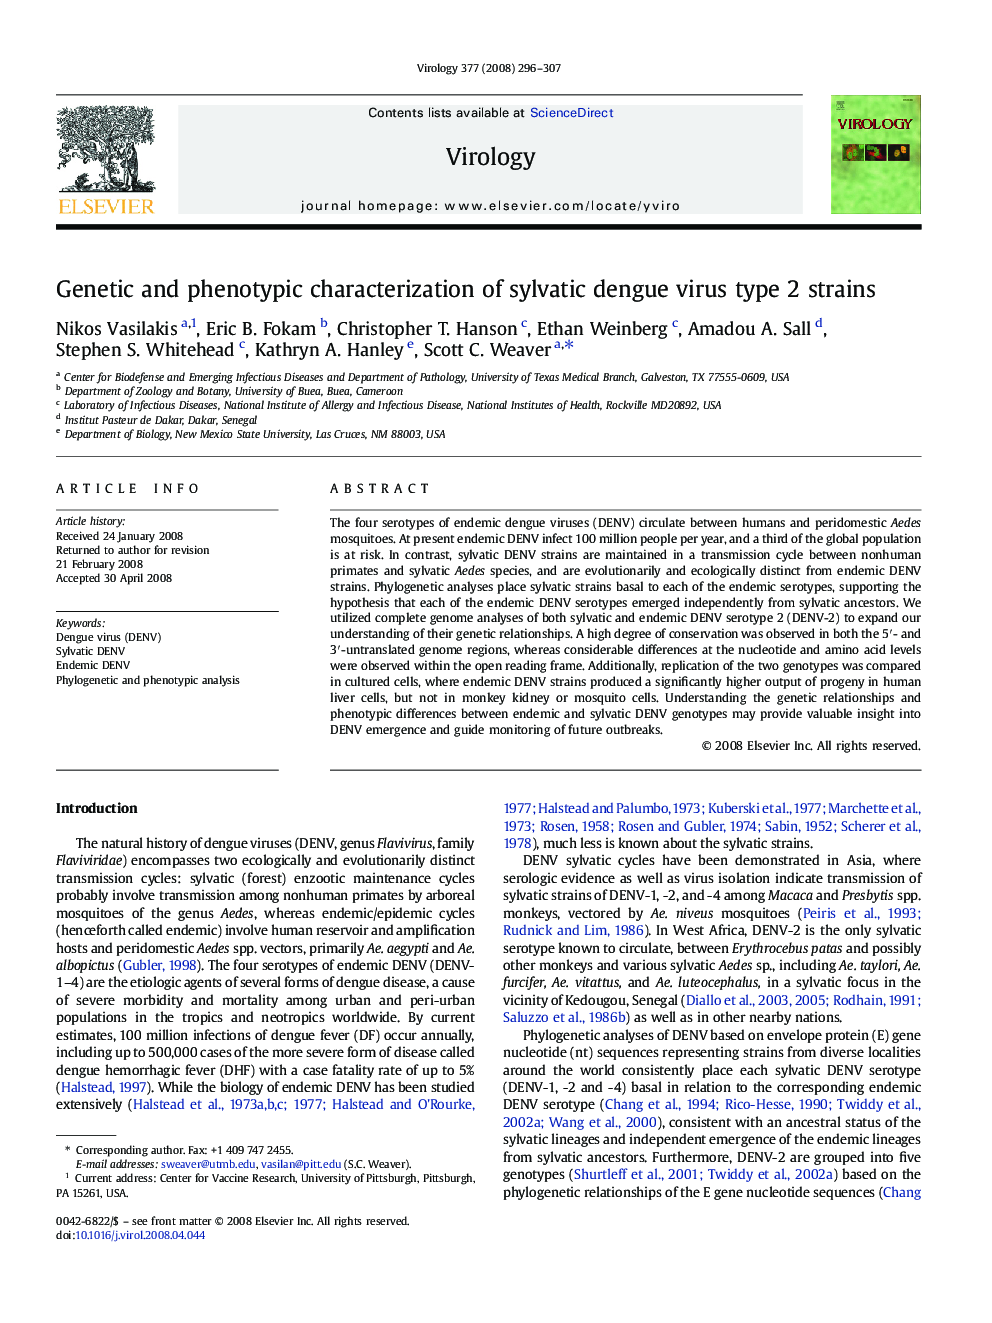 Genetic and phenotypic characterization of sylvatic dengue virus type 2 strains